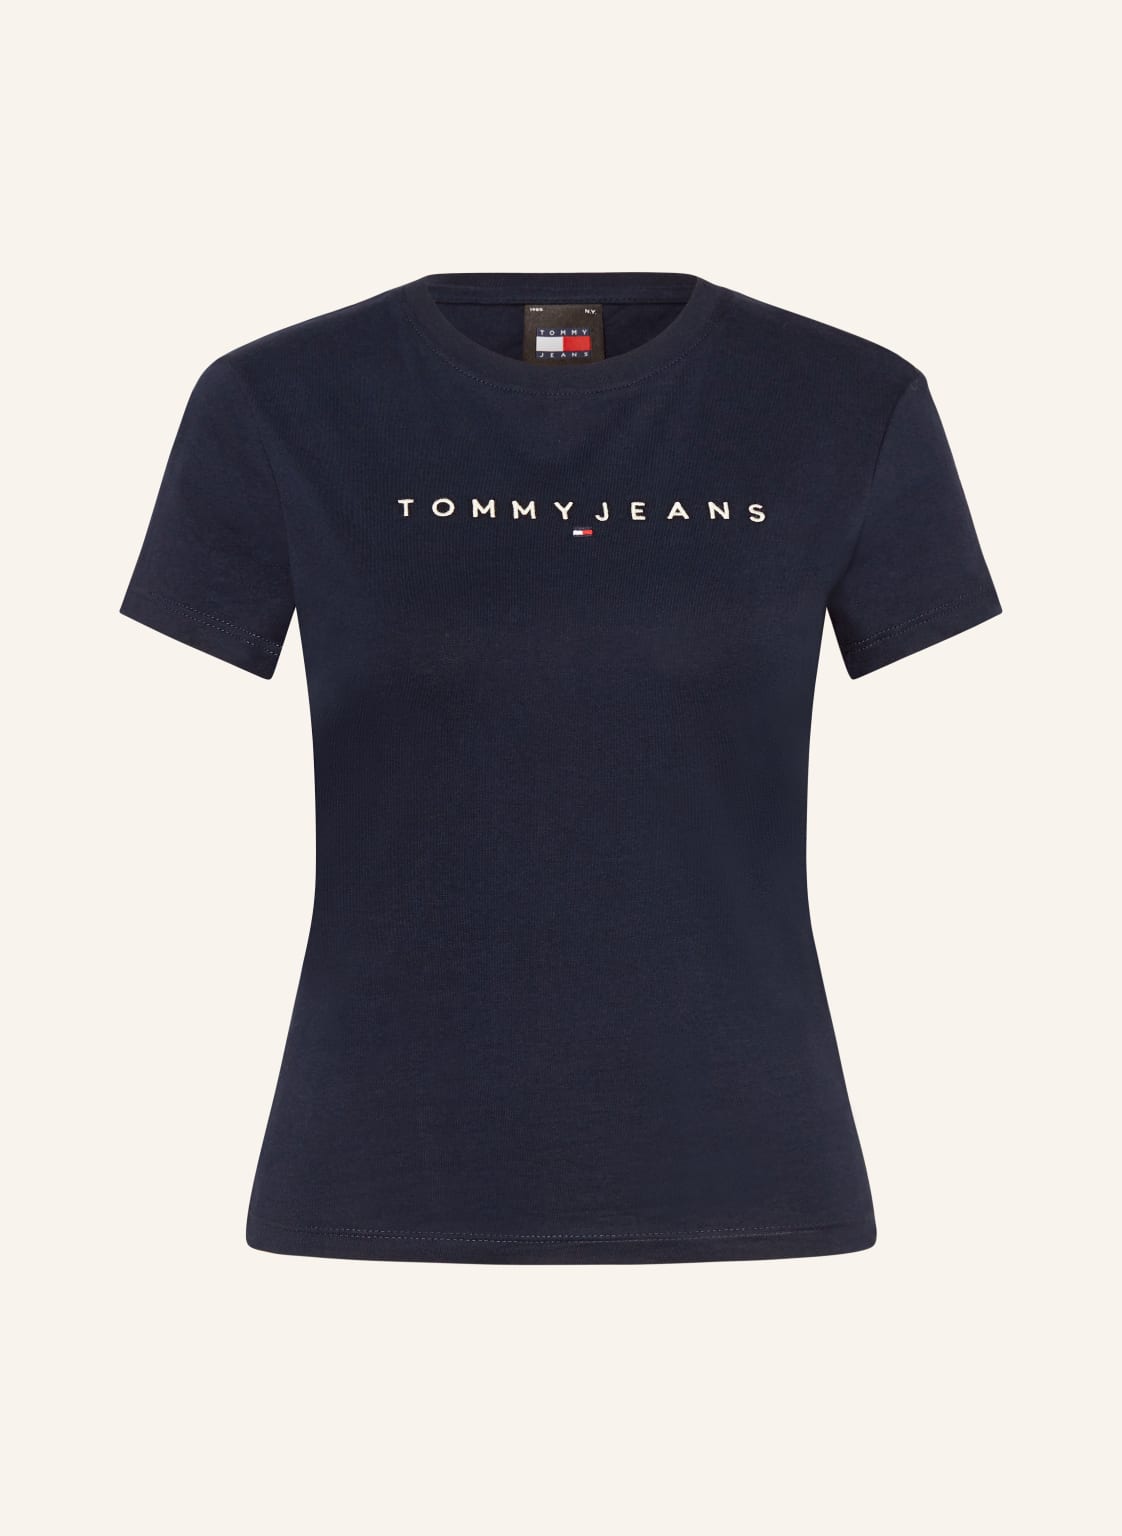 Tommy Jeans T-Shirt blau von Tommy Jeans